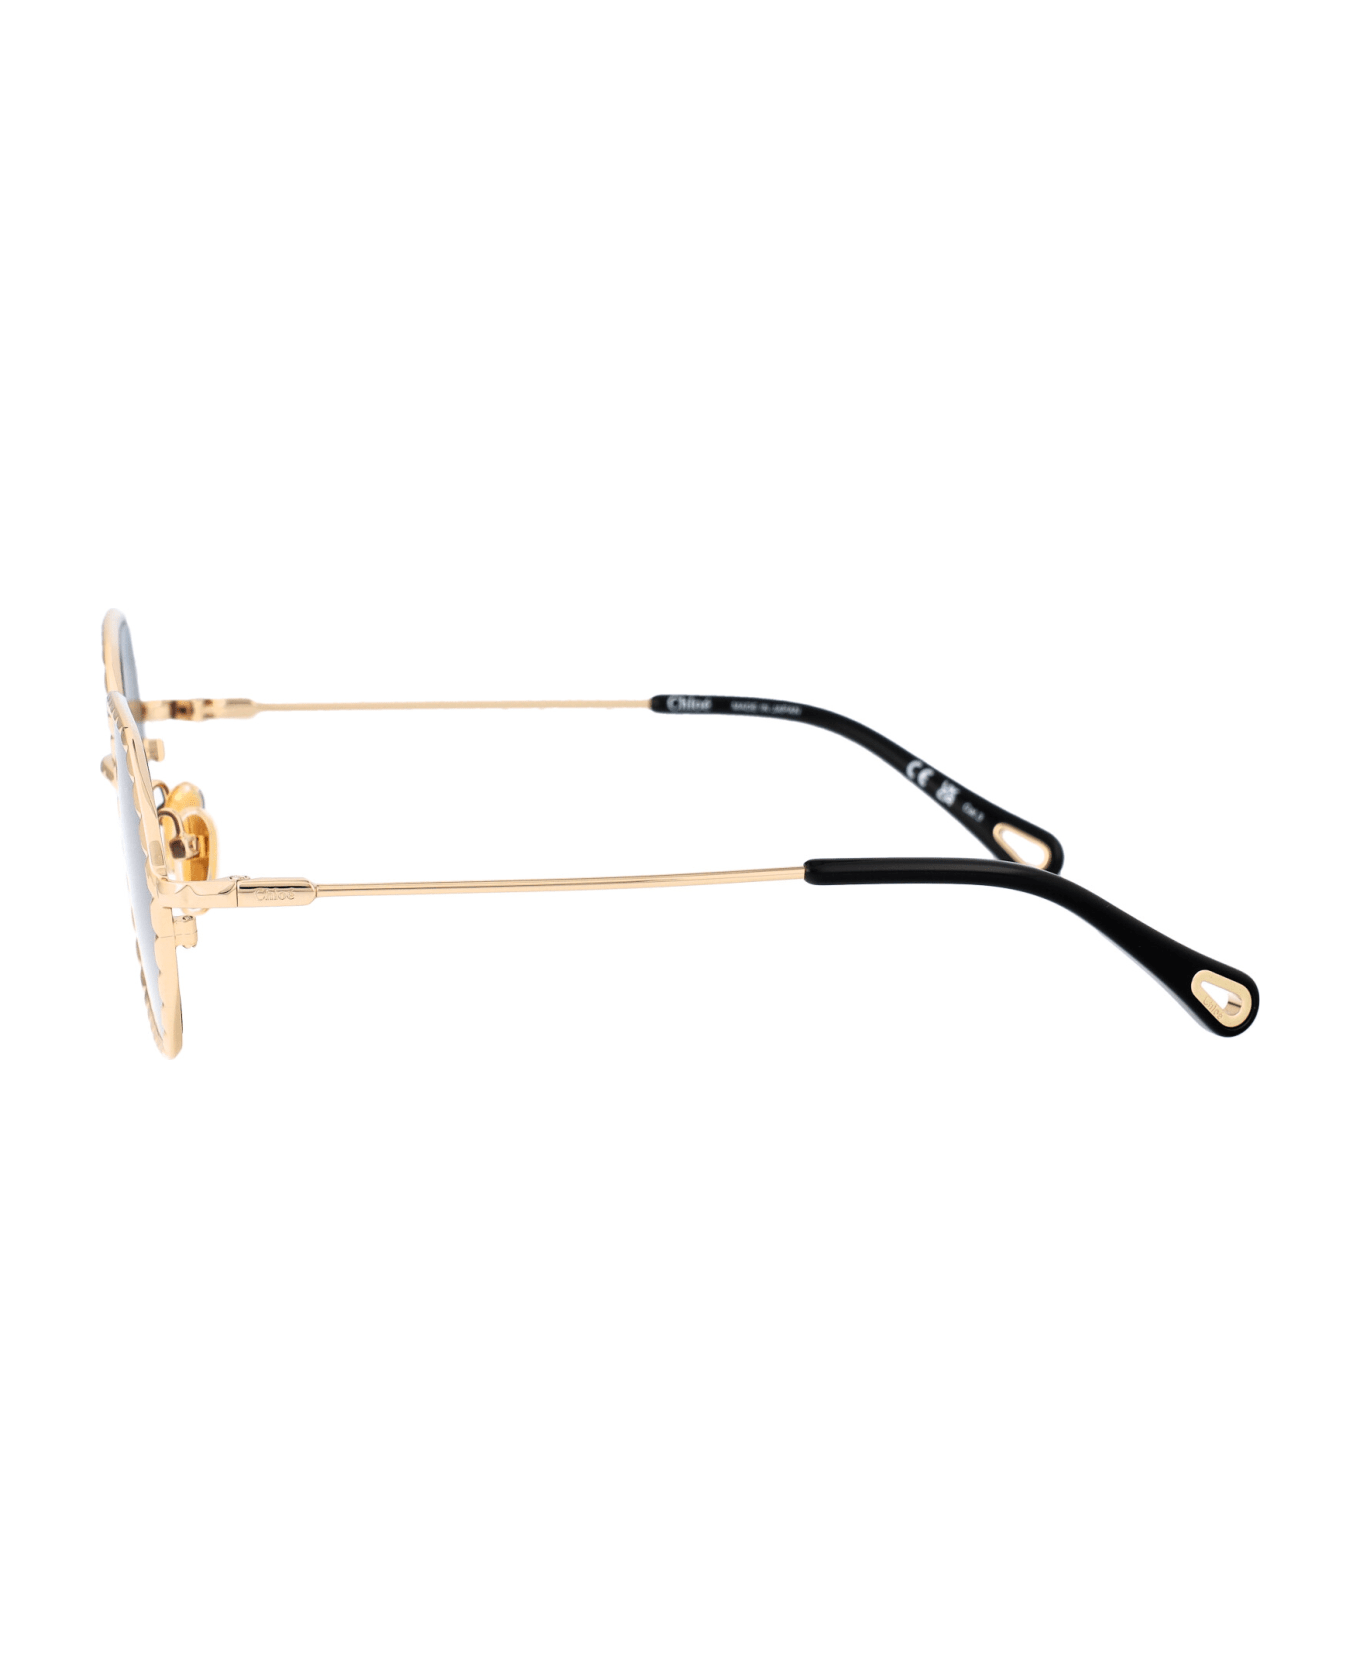 Chloé Eyewear Ch0231s Sunglasses - 001 GOLD GOLD GREY サングラス